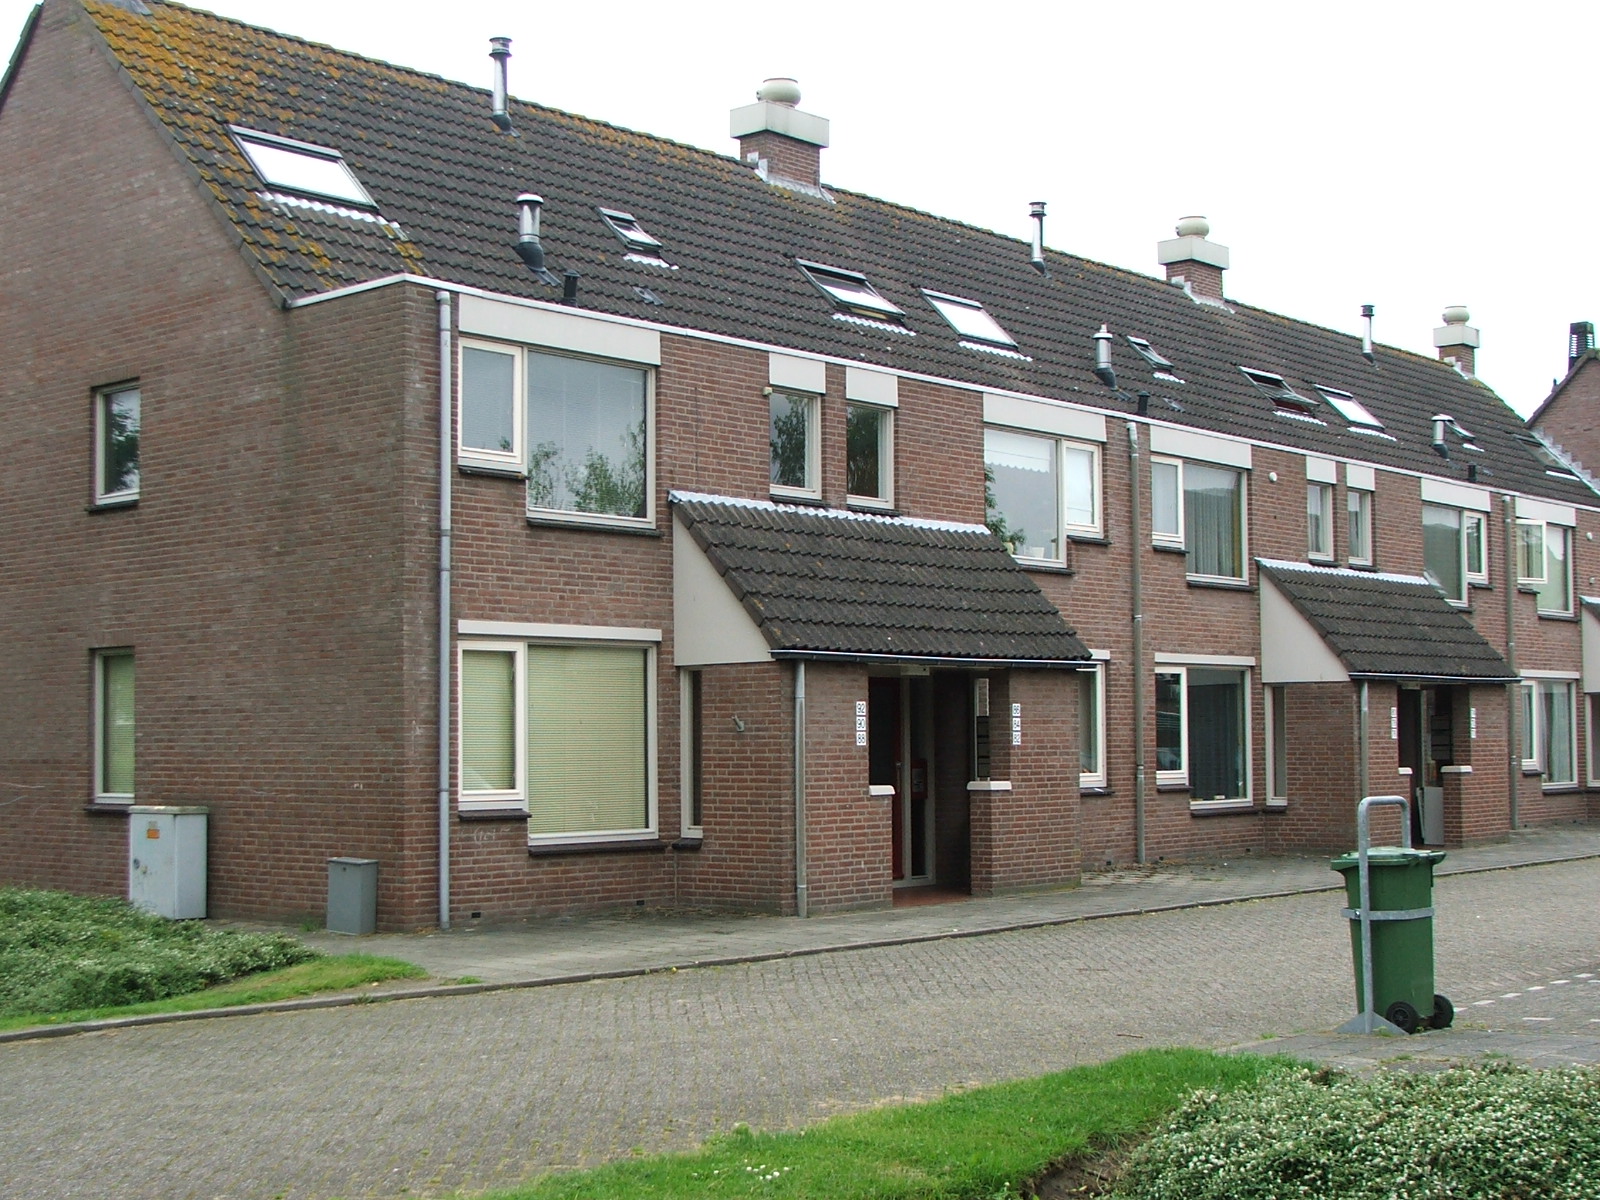 Kloofpad 74, 2451 GD Leimuiden, Nederland